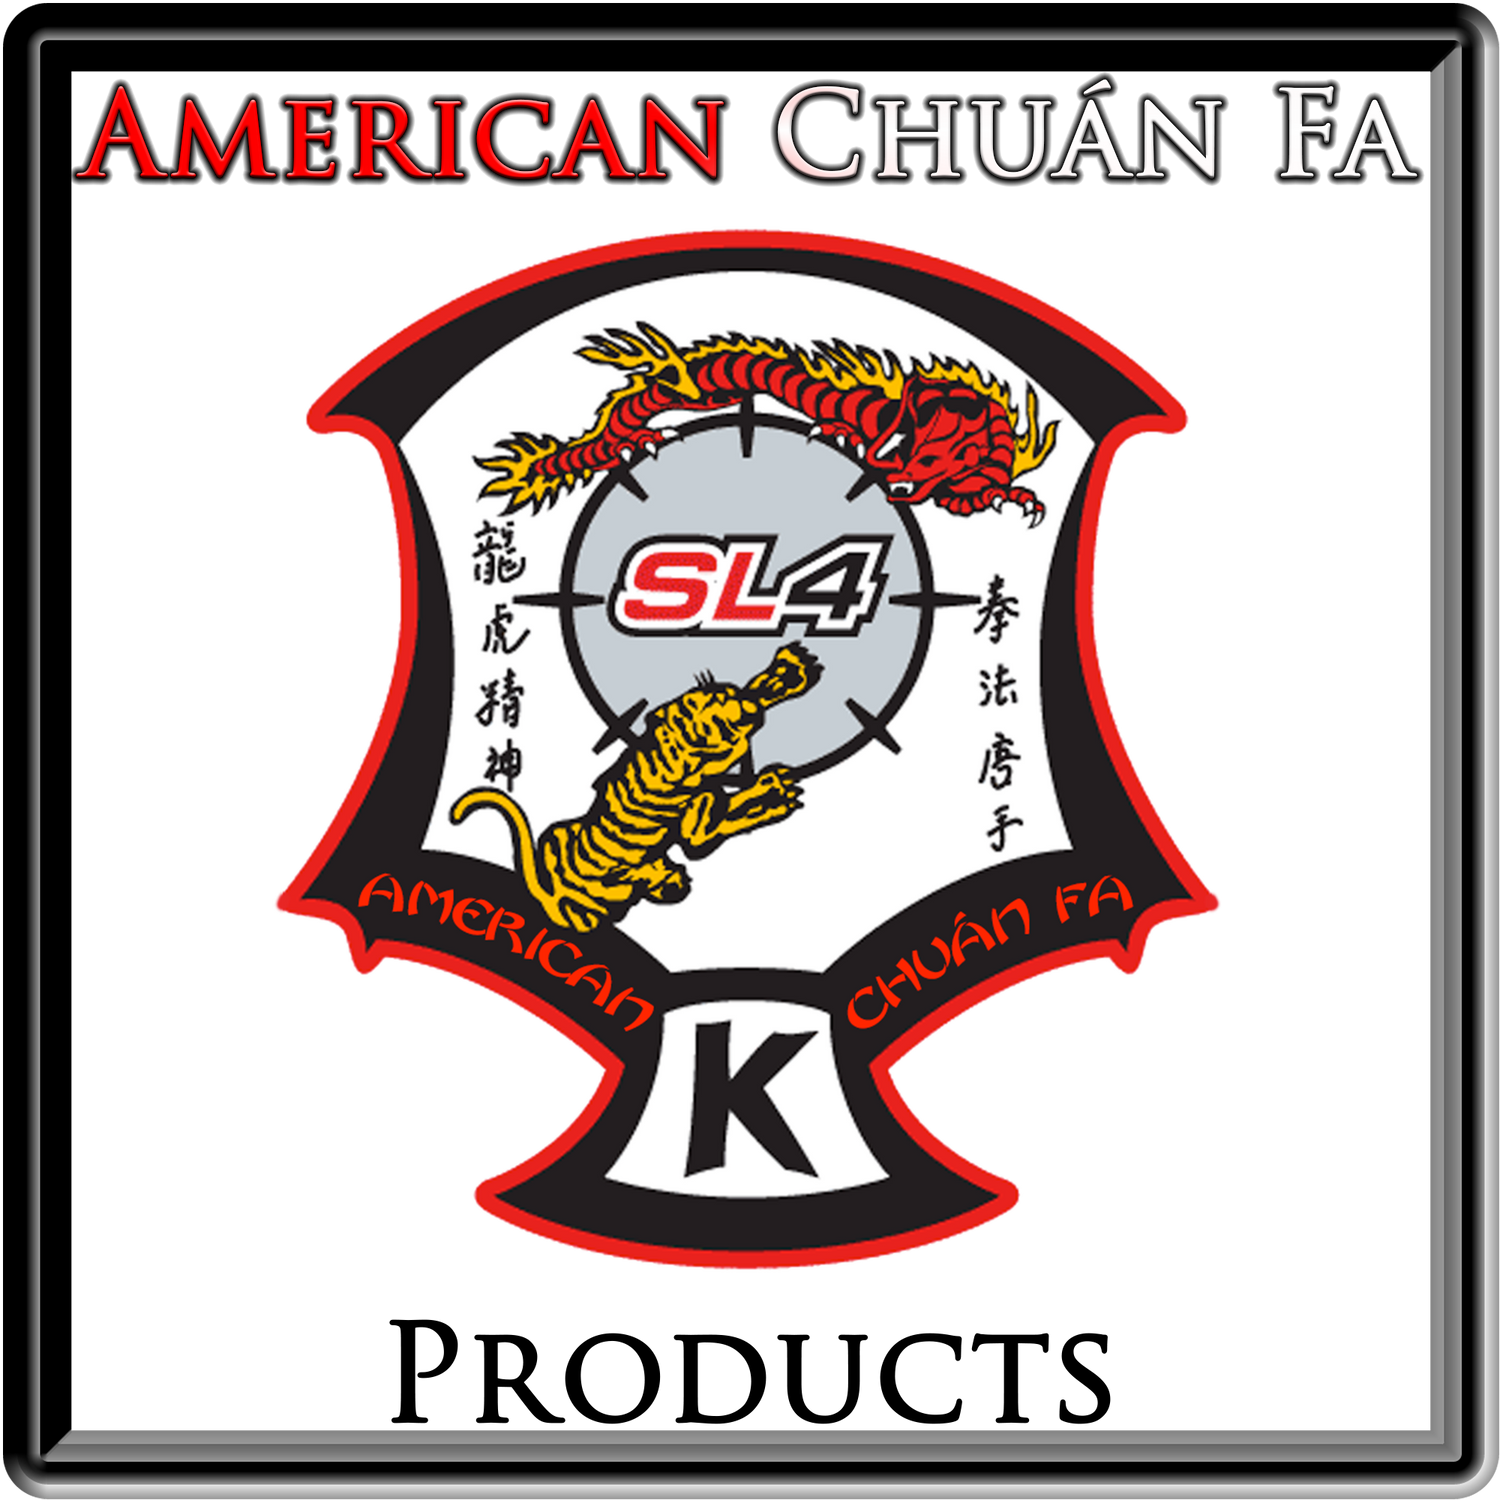 MSU American Chuan Fa logo products